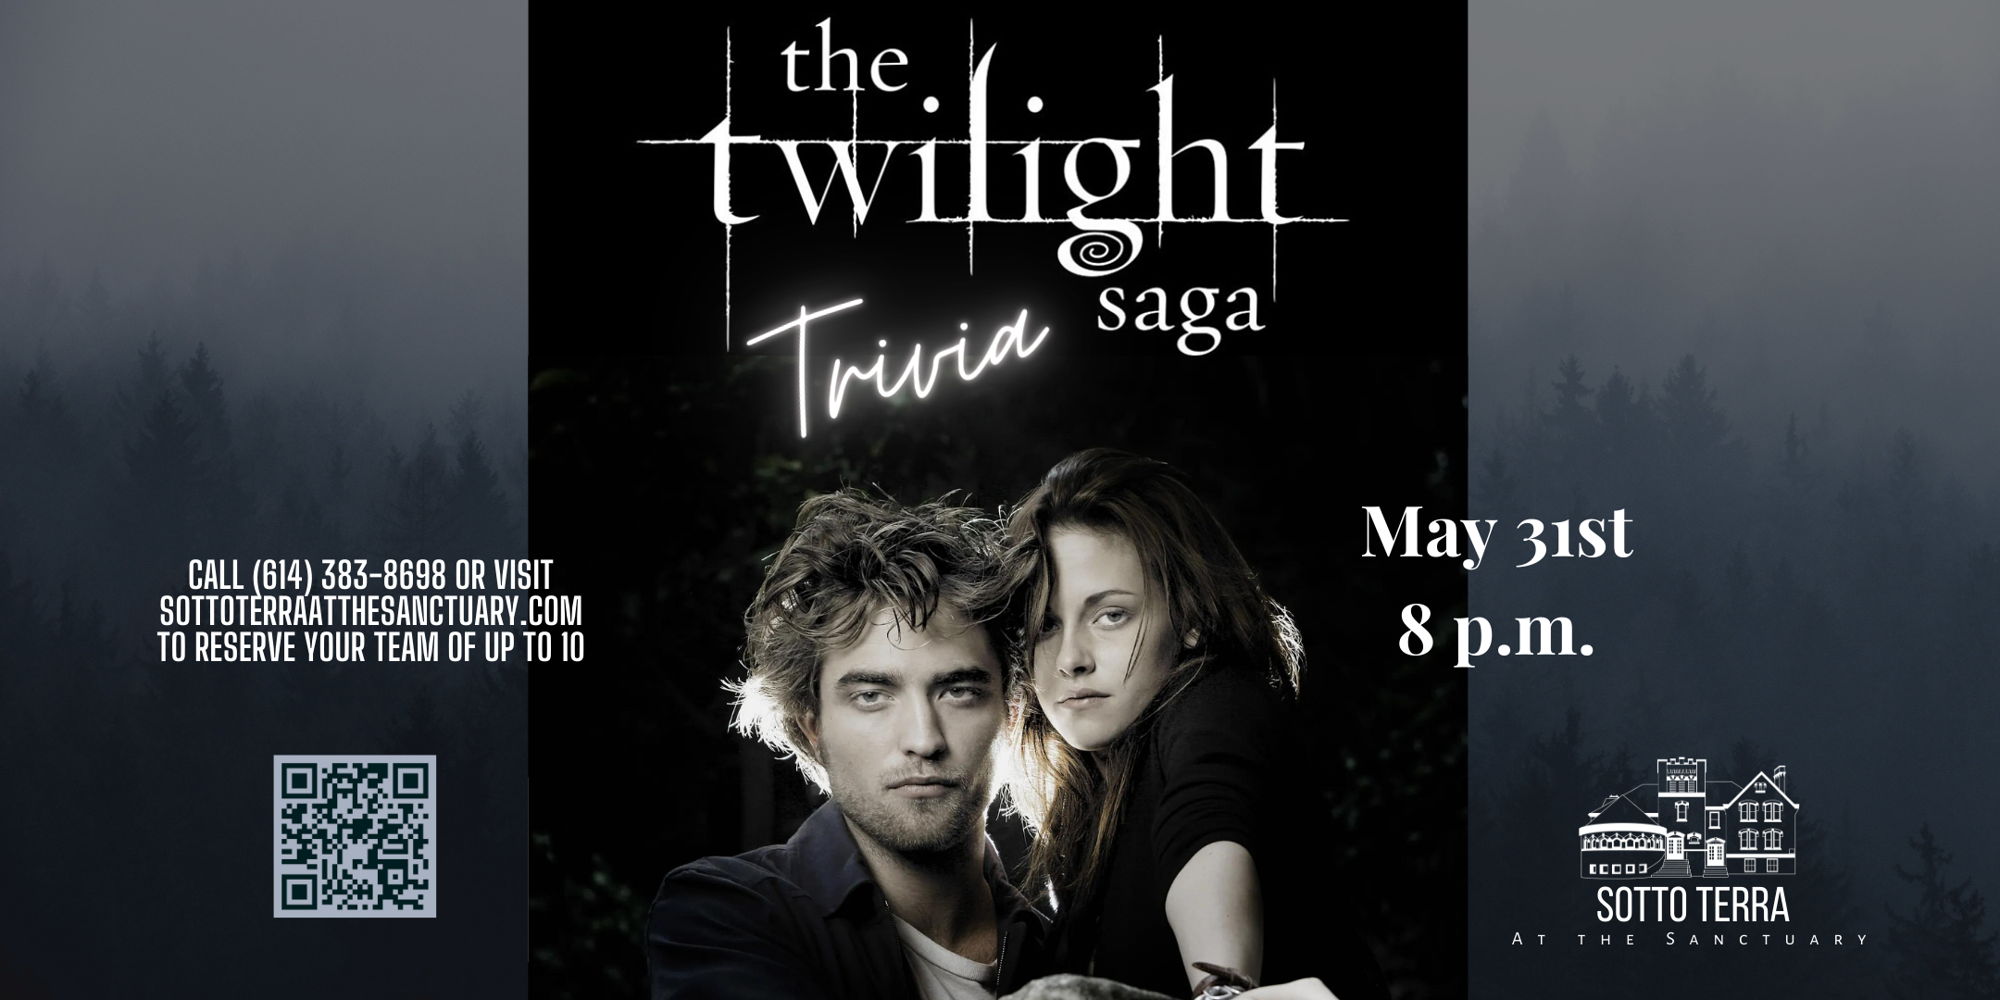 The Twilight Saga Trivia  promotional image